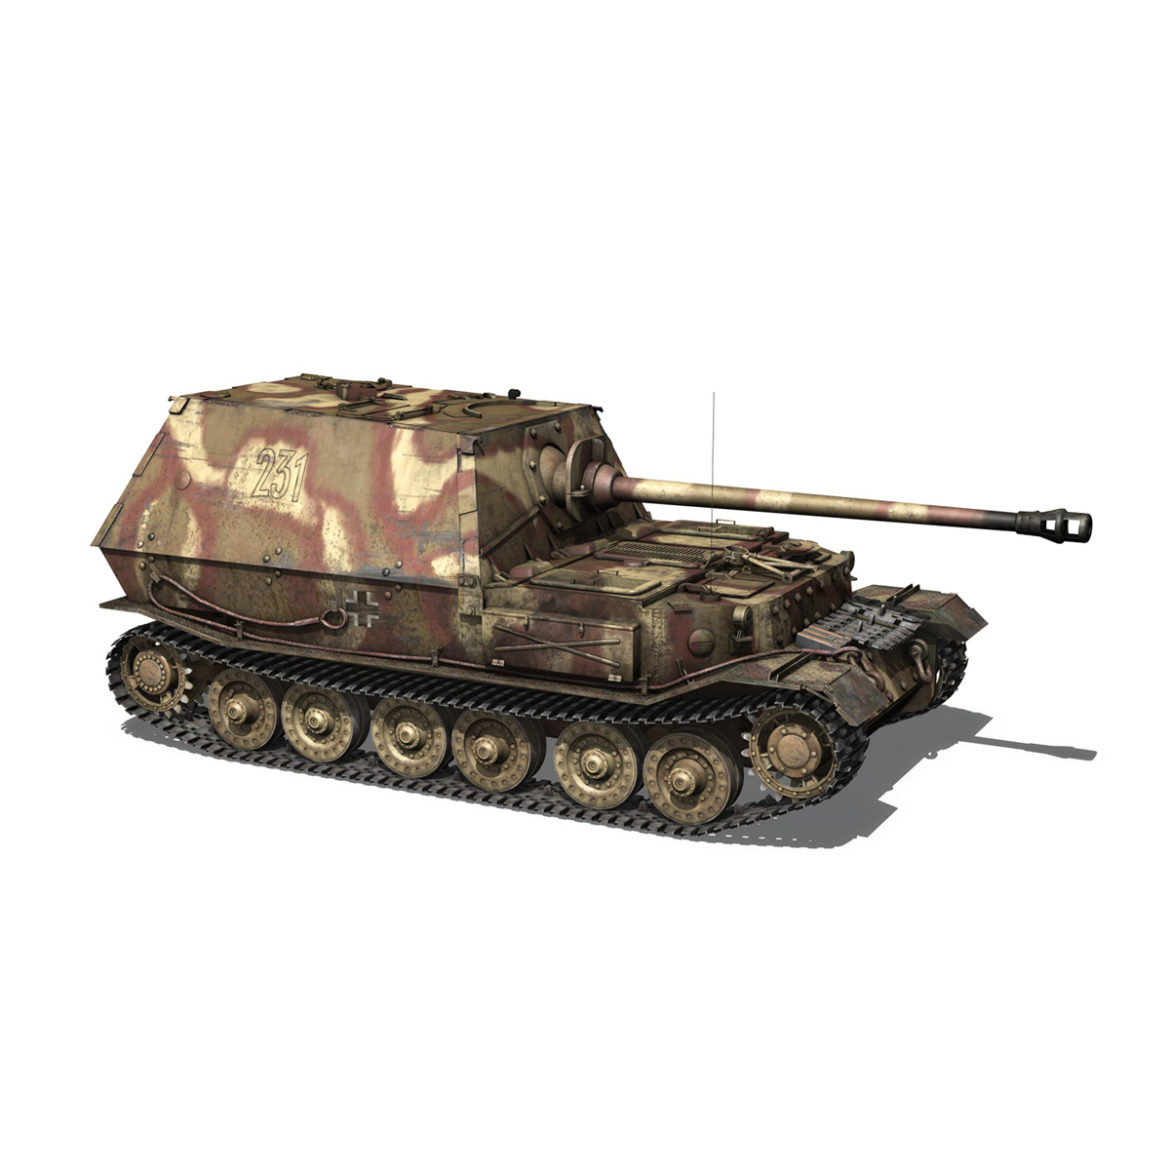 ferdinand tank destroyer – tiger (p) – 231 3d model 3ds fbx c4d lwo obj 295023